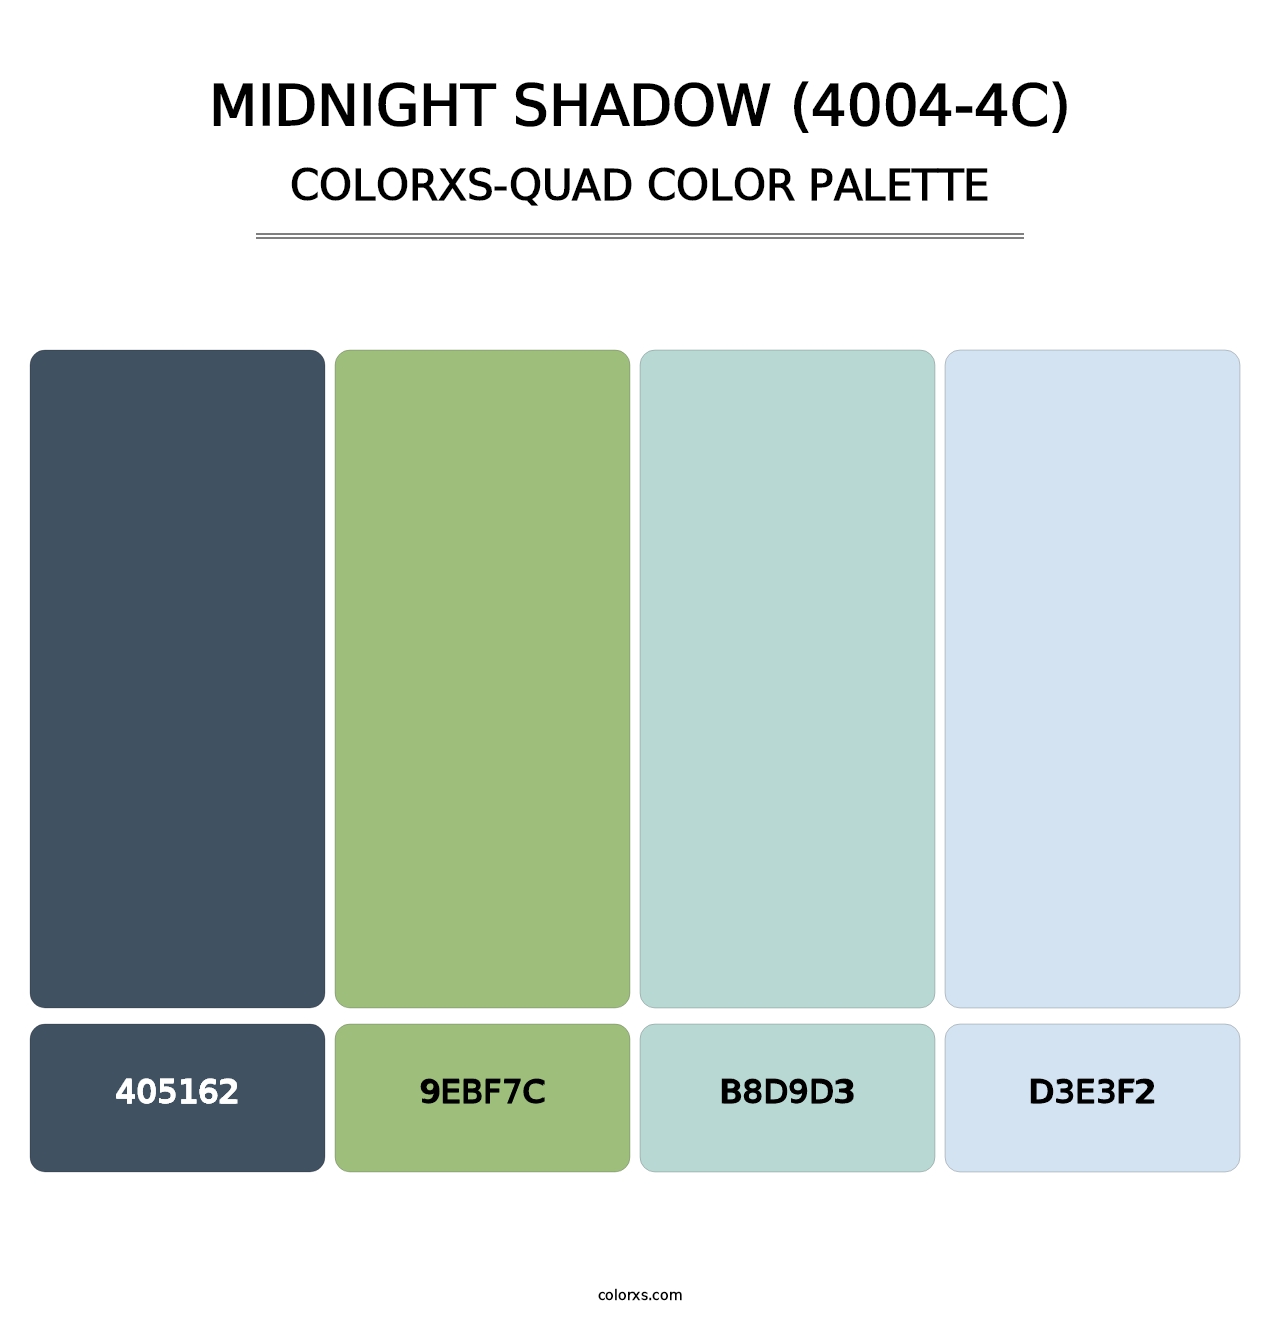 Midnight Shadow (4004-4C) - Colorxs Quad Palette